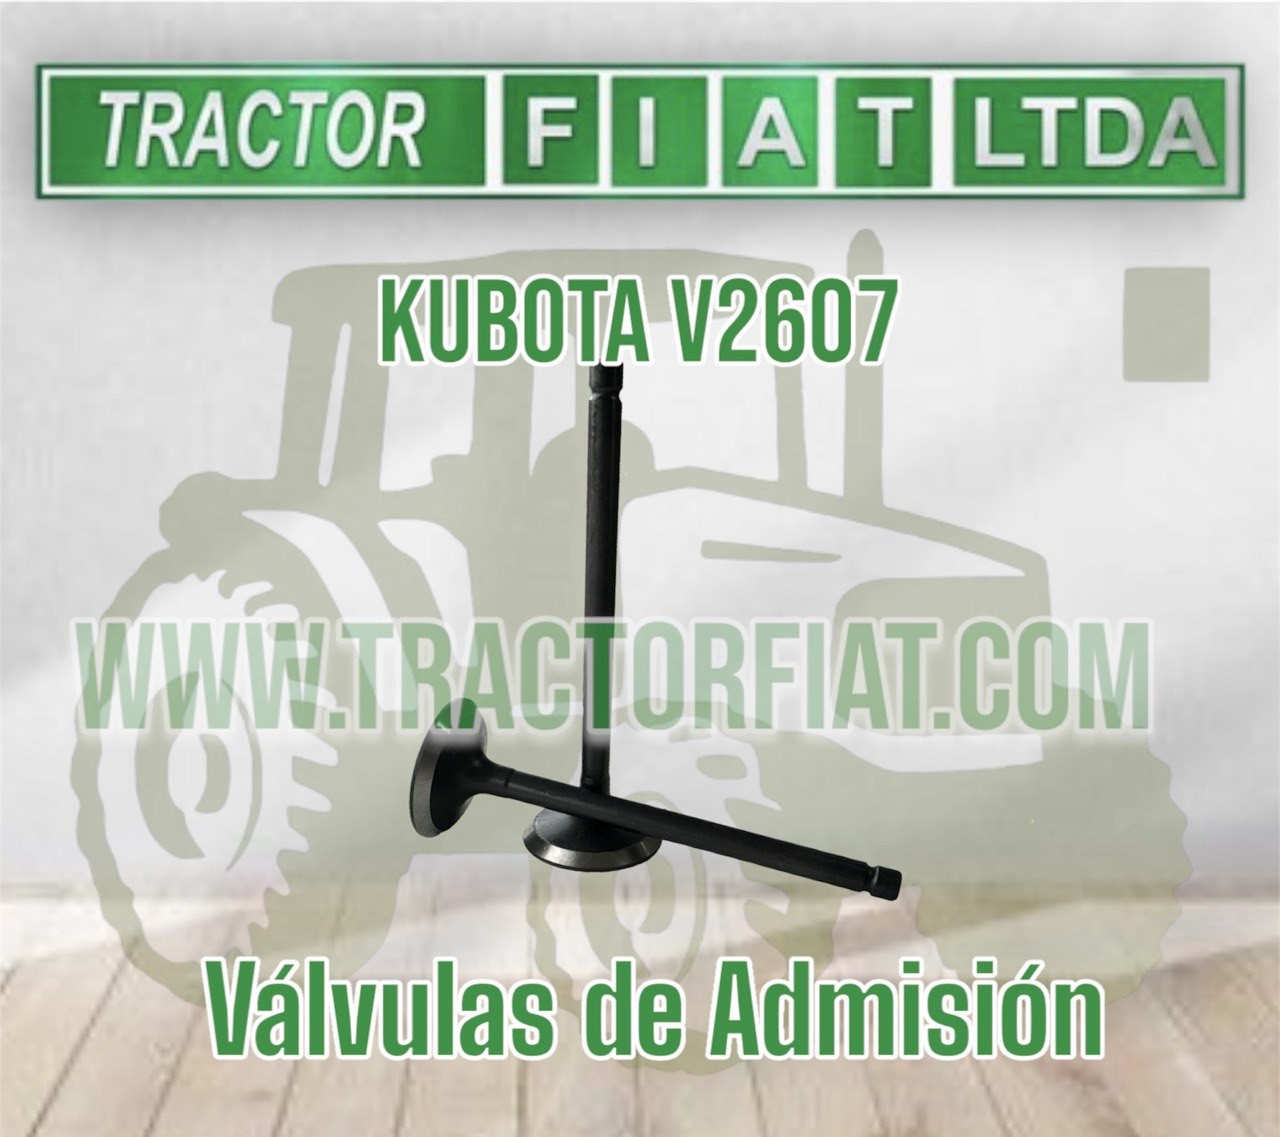 VALVULAS DE ADMISION - MOTOR KUBOTA V2607